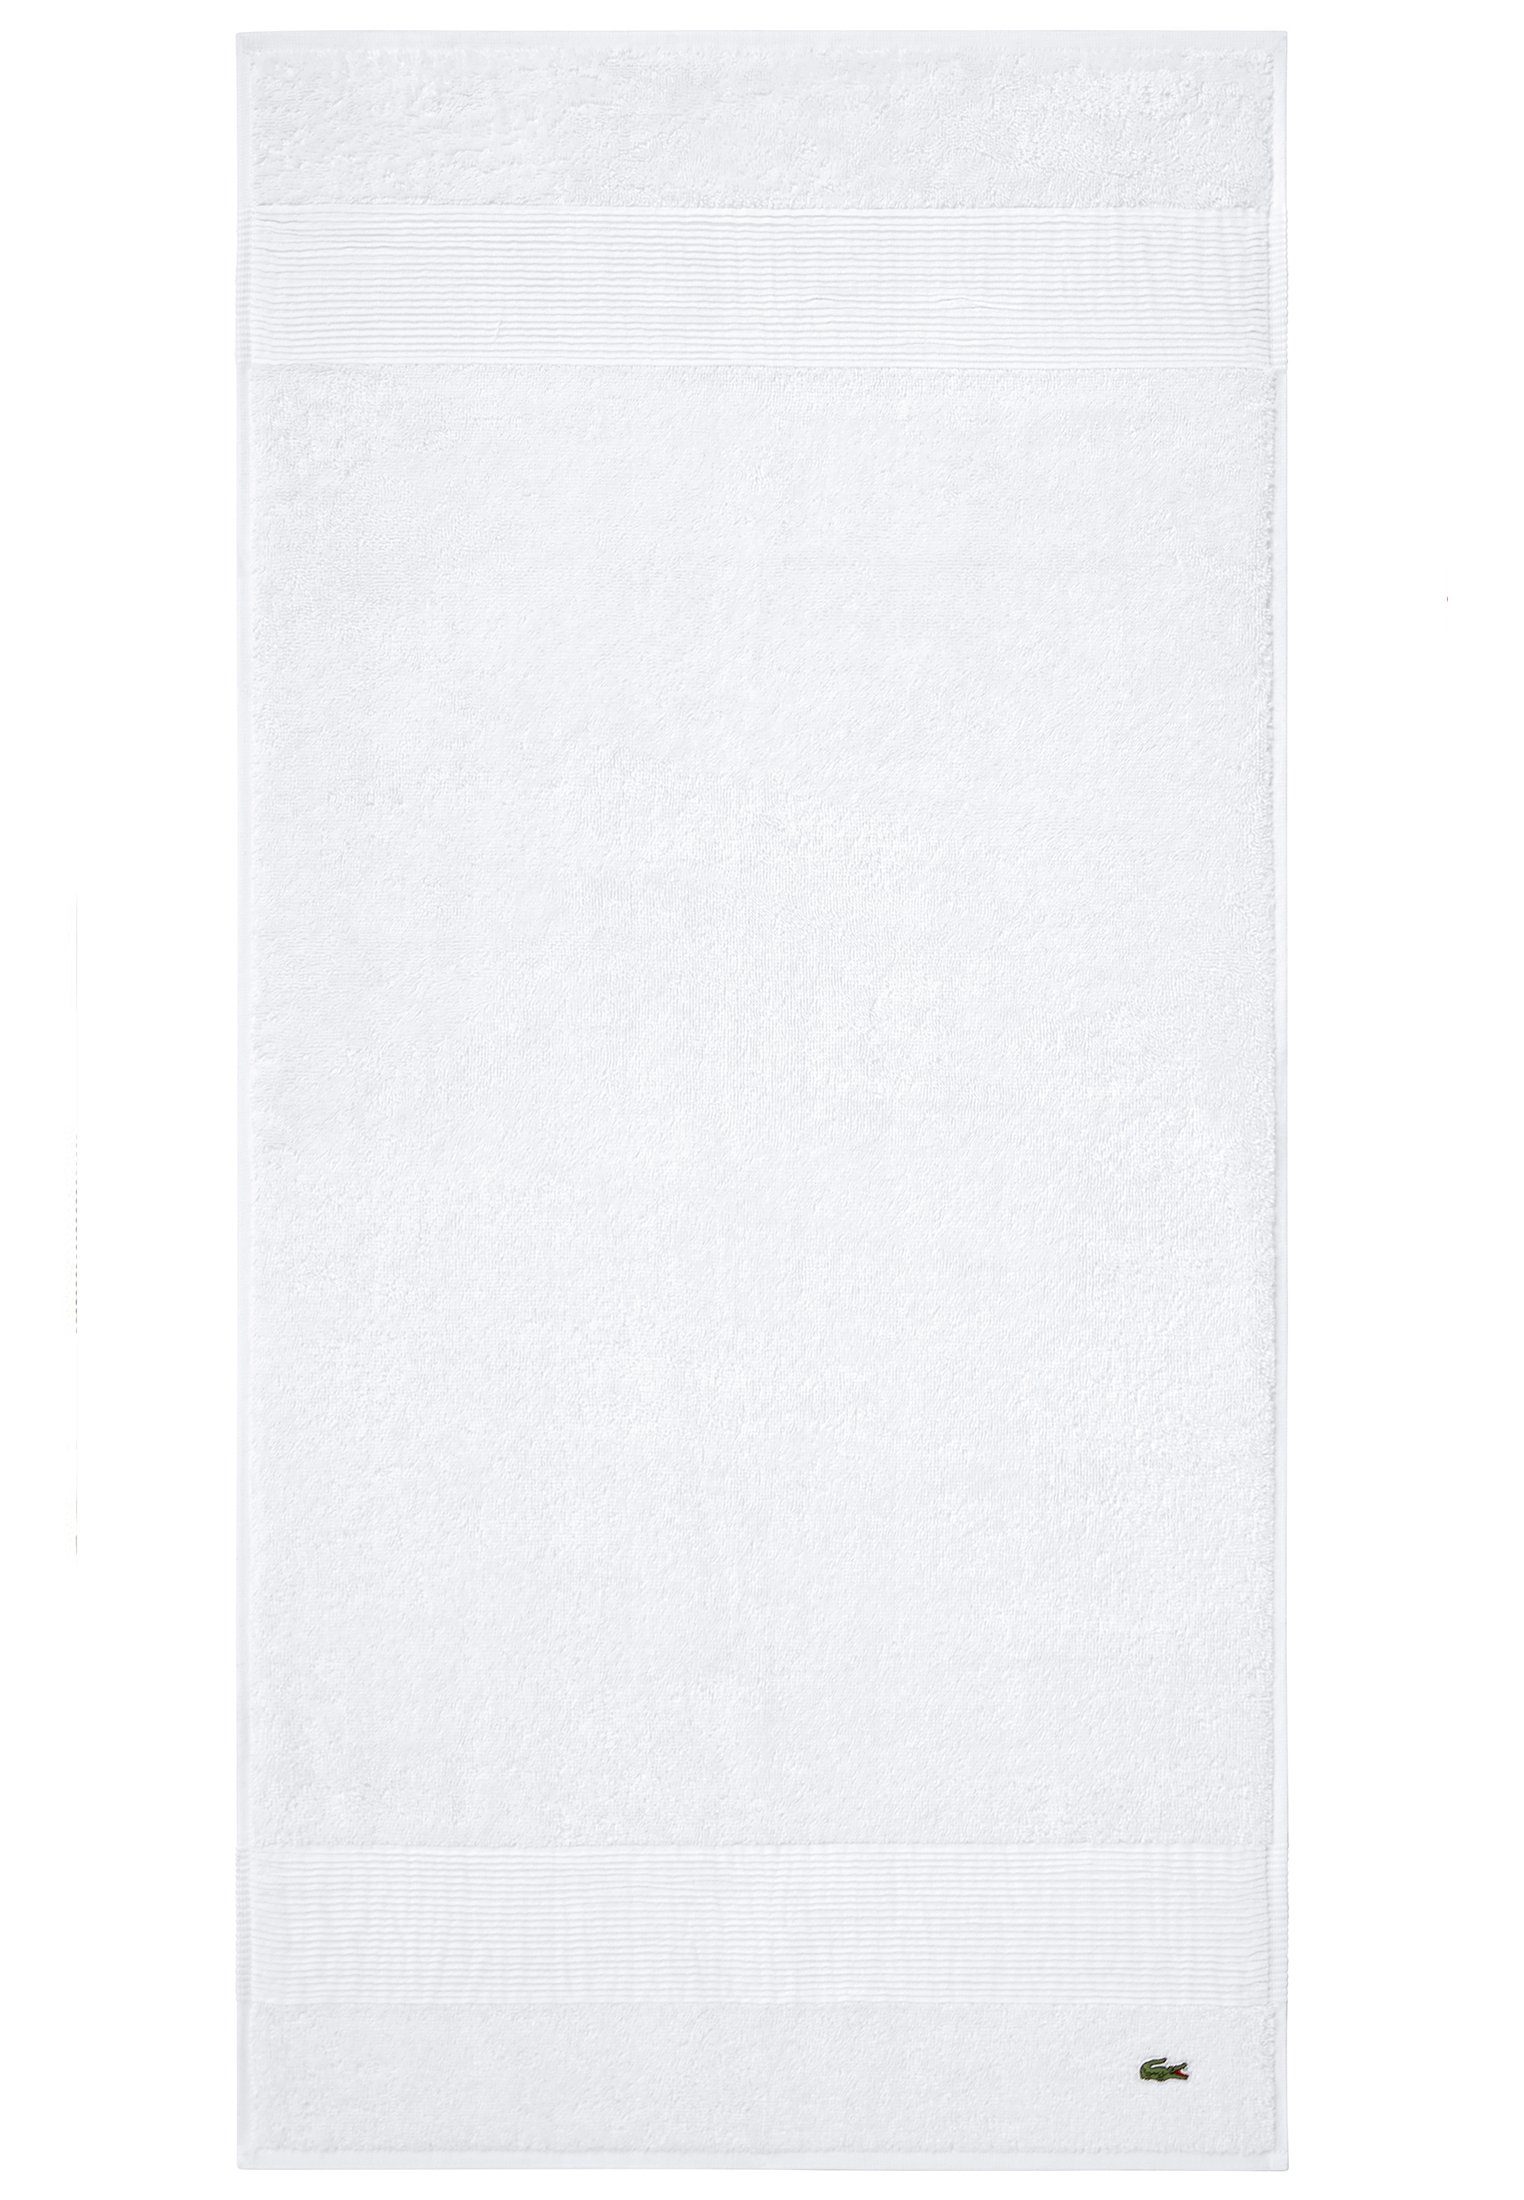 Lacoste Handtücher (2tlg), L CROCO BLANC Label-Applikationen mit LE